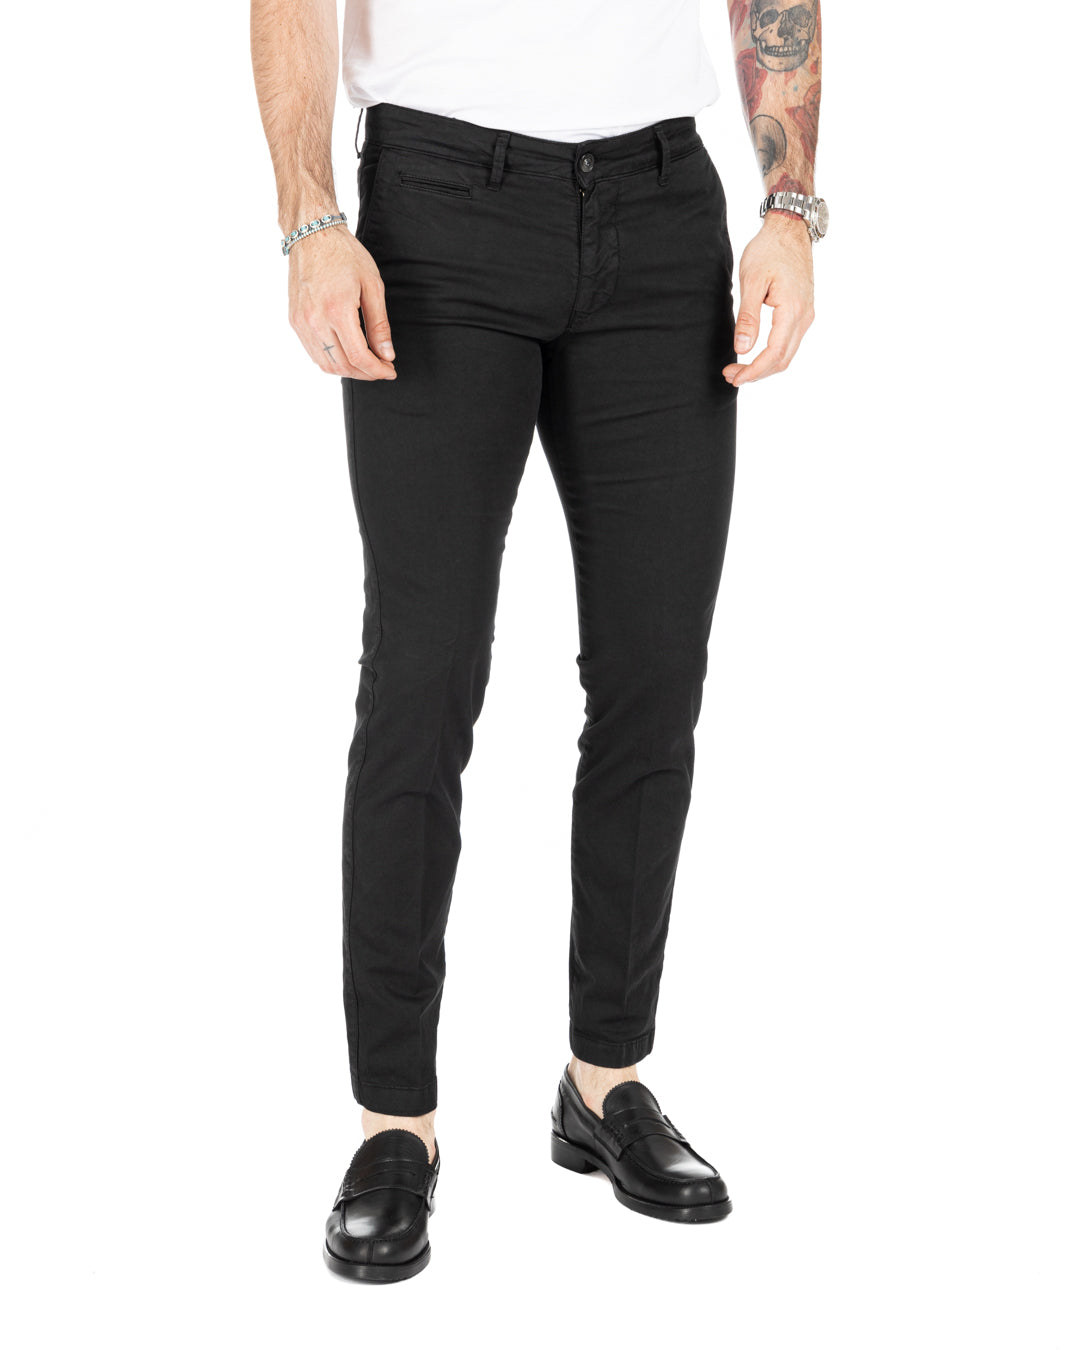 Frank - black basic trousers